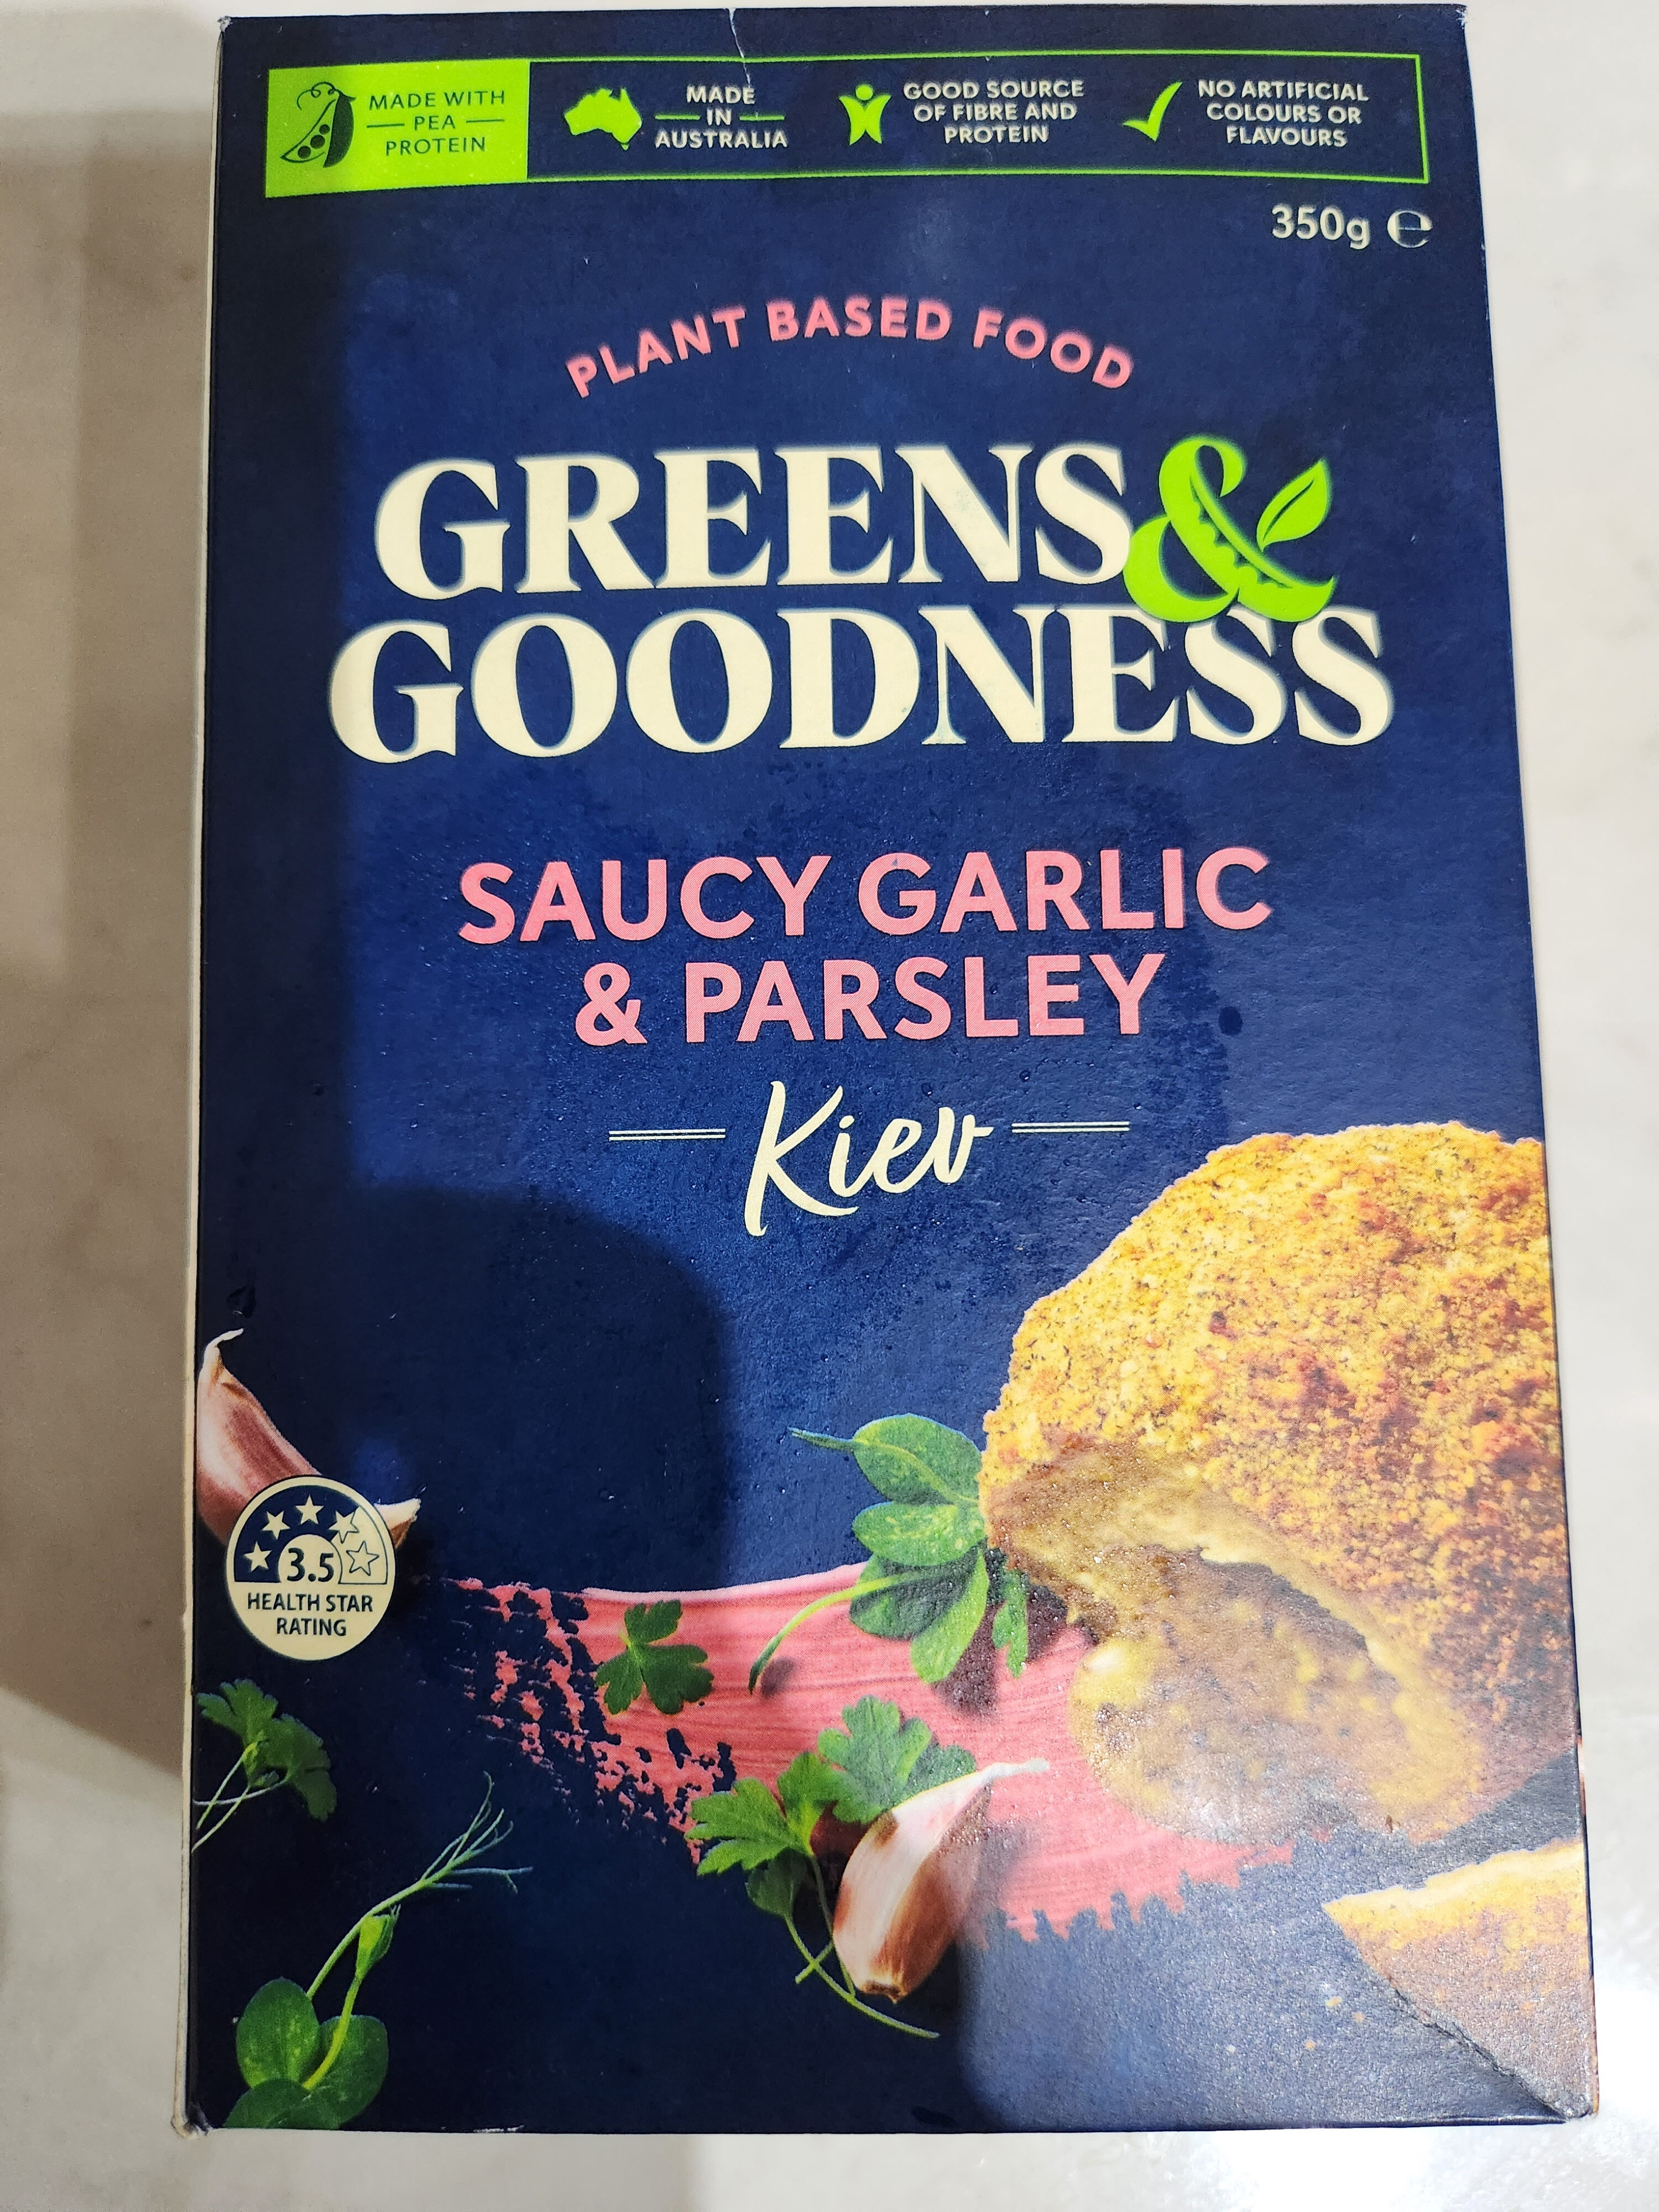 saucy garlic and parsley kiev - Product